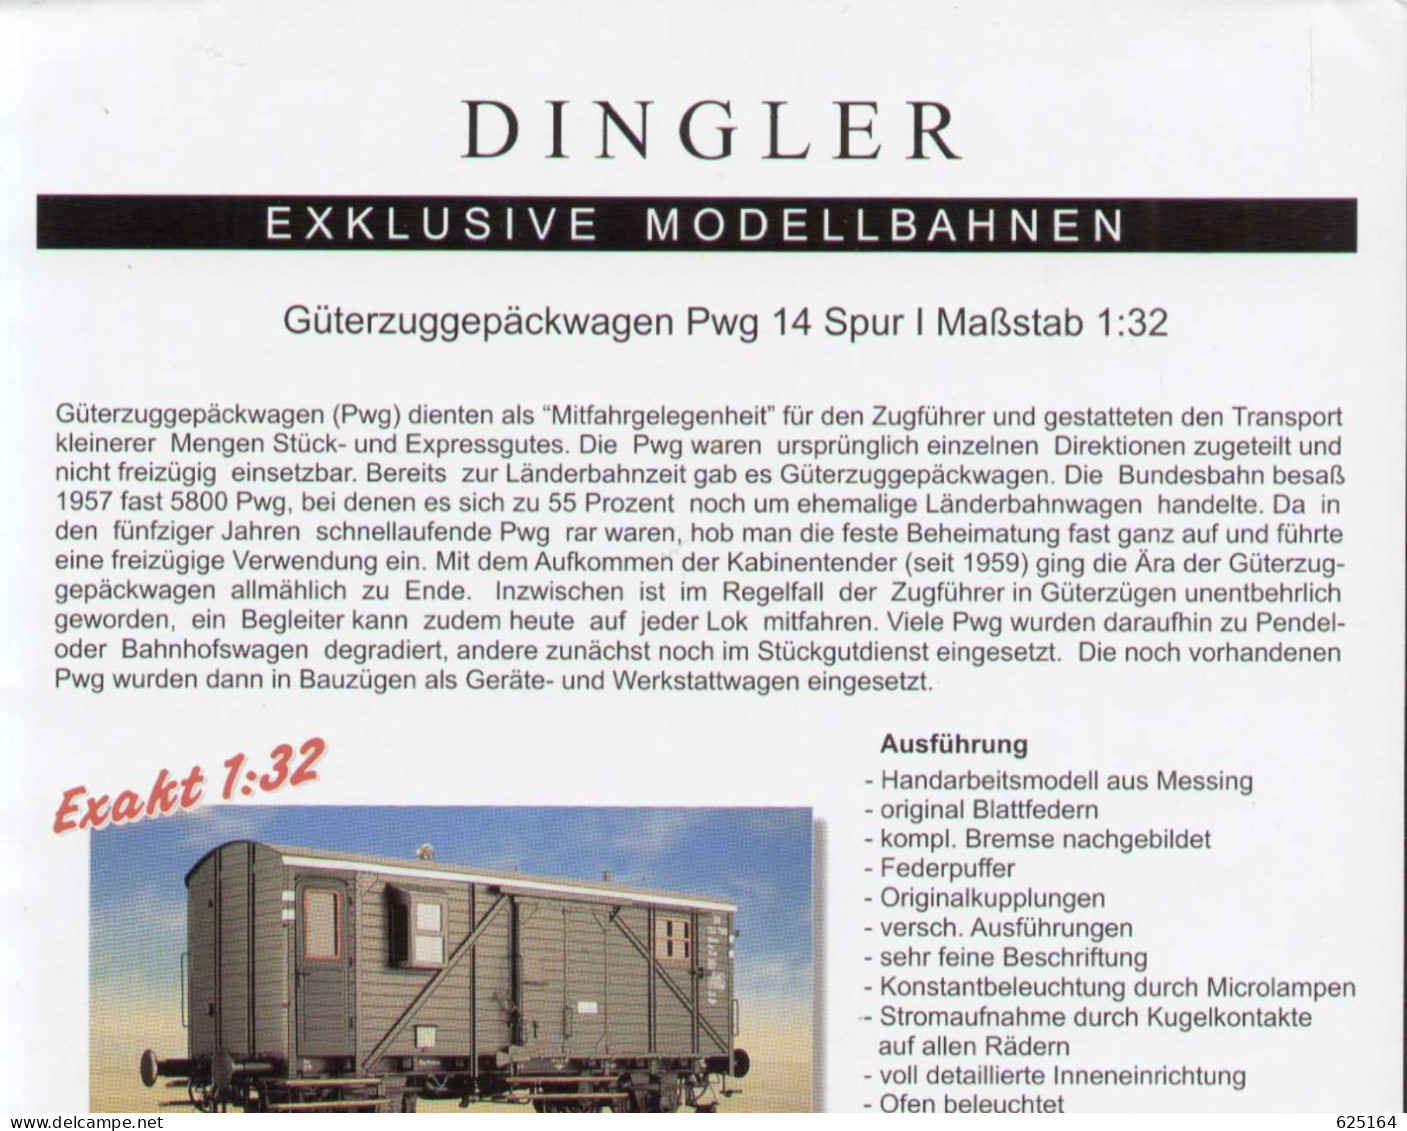 Catalogue DINGLER EXCLUSIVE MODELLBAHNEN 1999 Spur I Informationsblatt - Tedesco